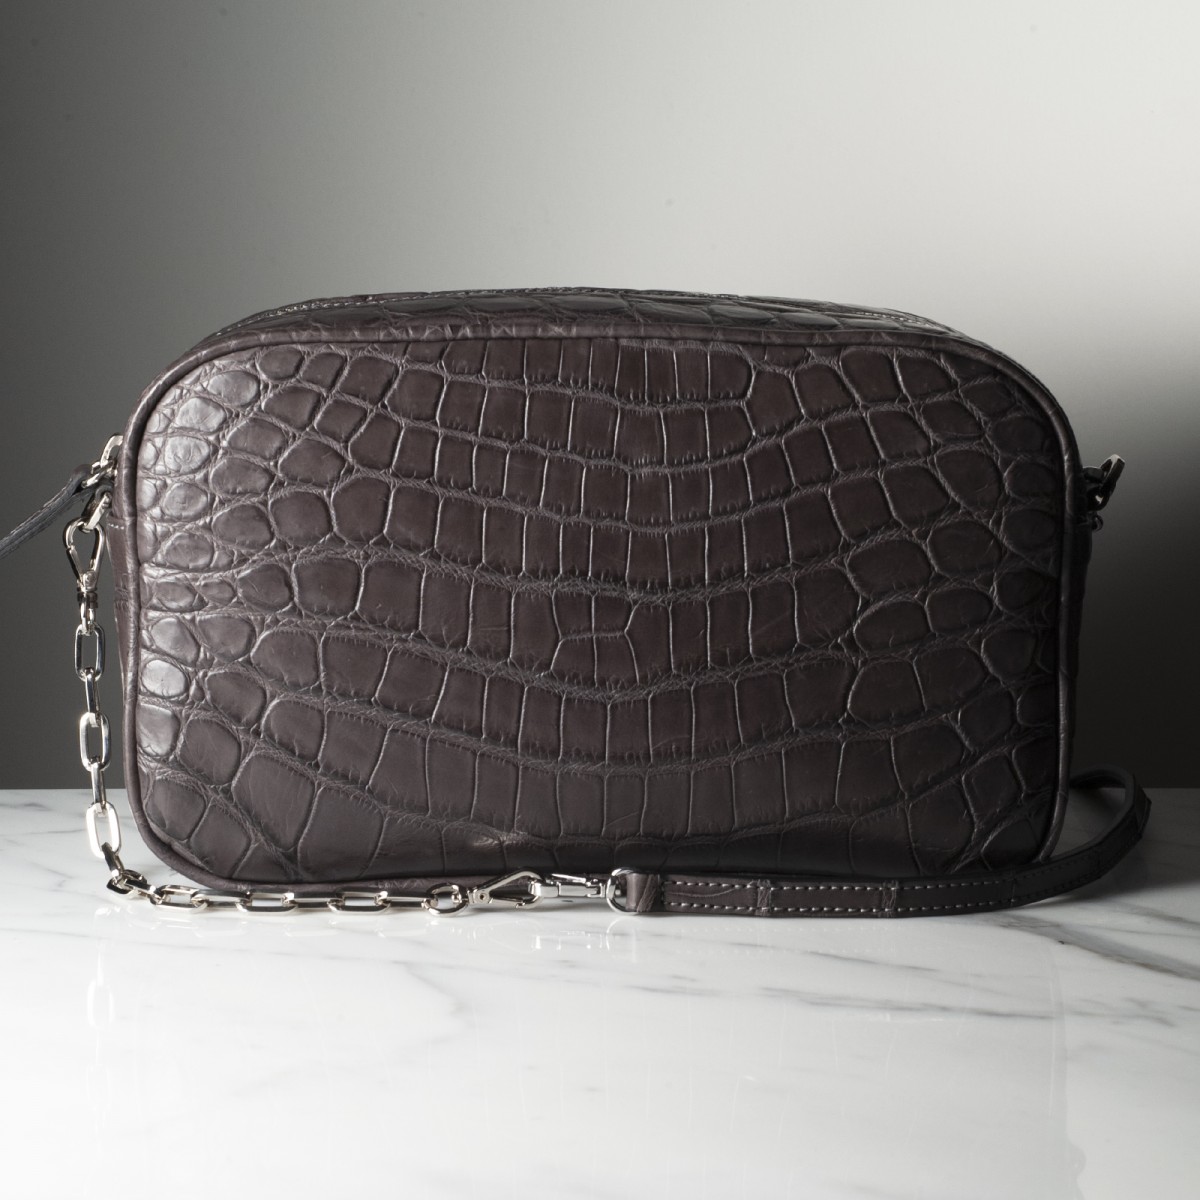 GINA CROCODILE - Crocodile leather bag, handmade in Italy